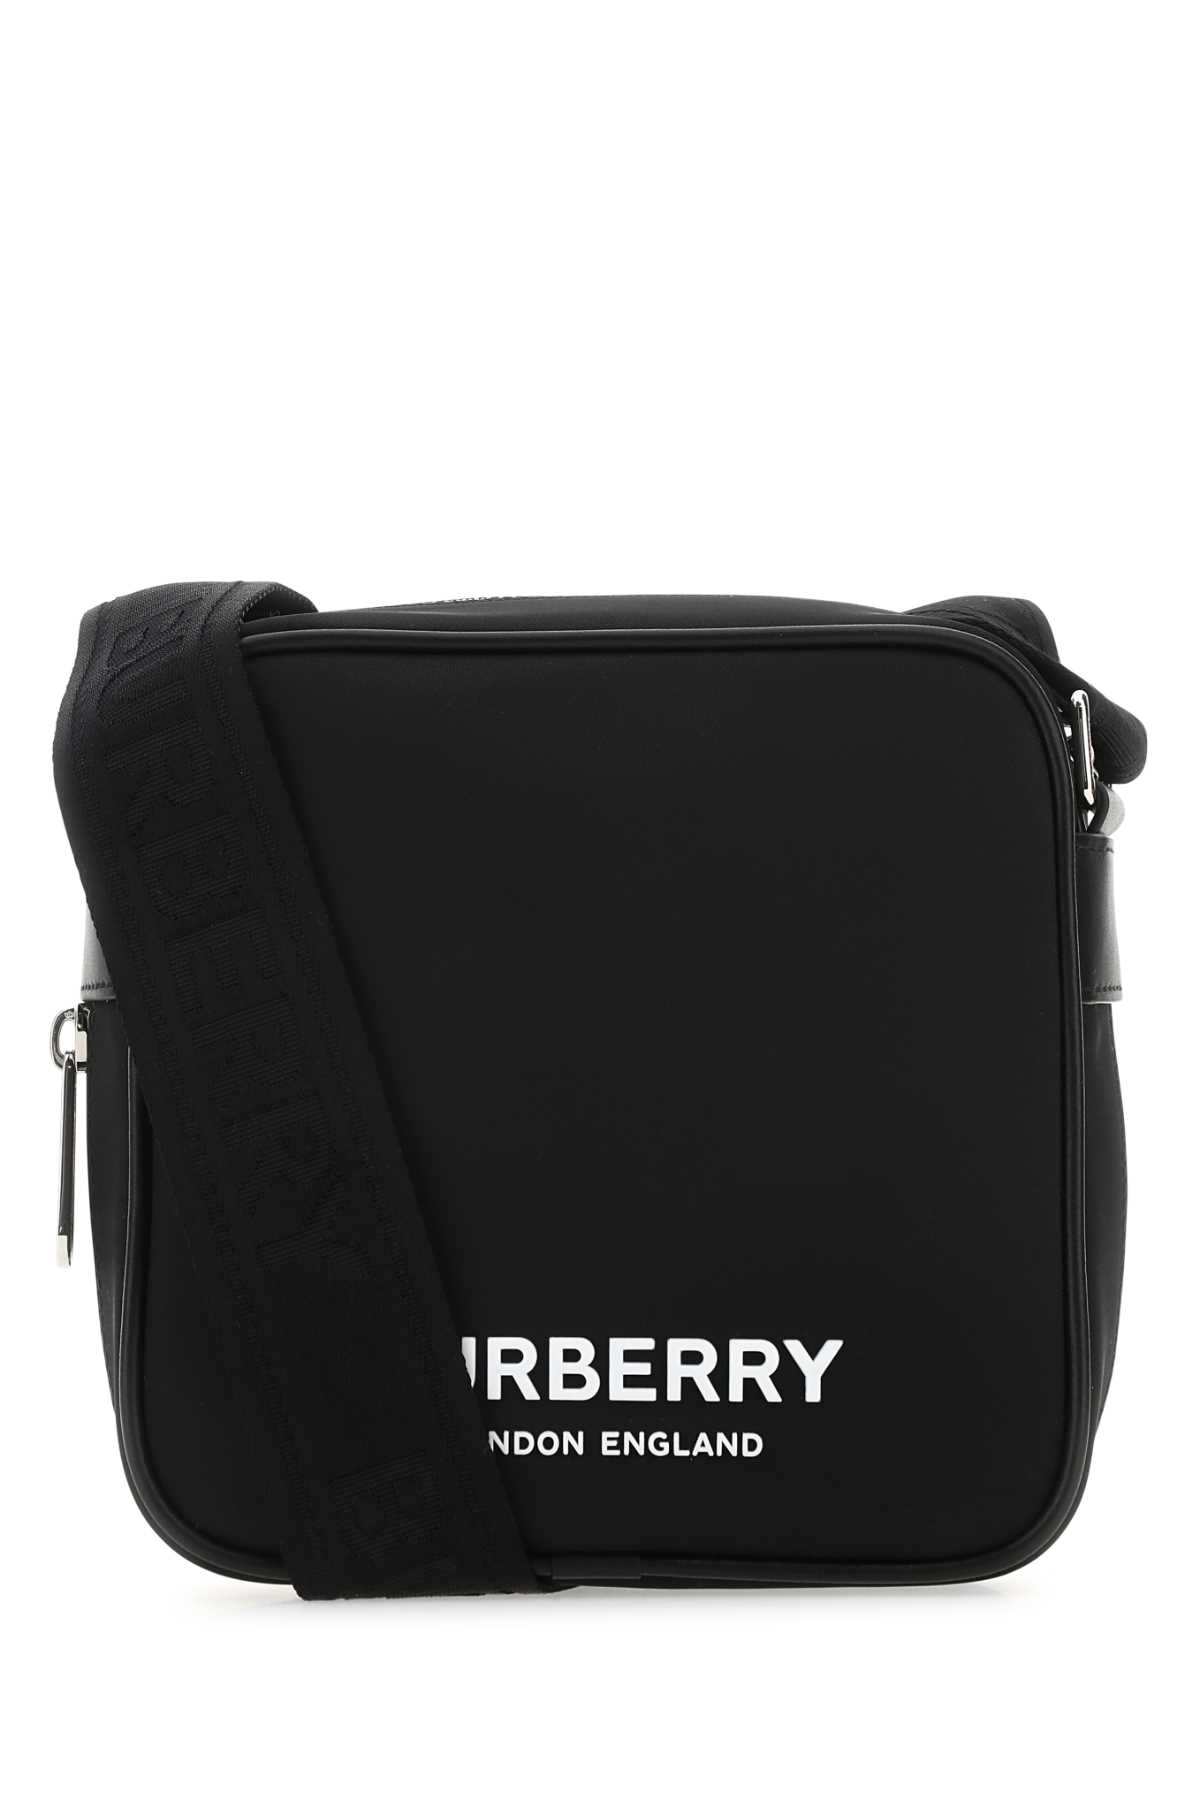 Burberry Black Nylon Paddy Crossbody Bag